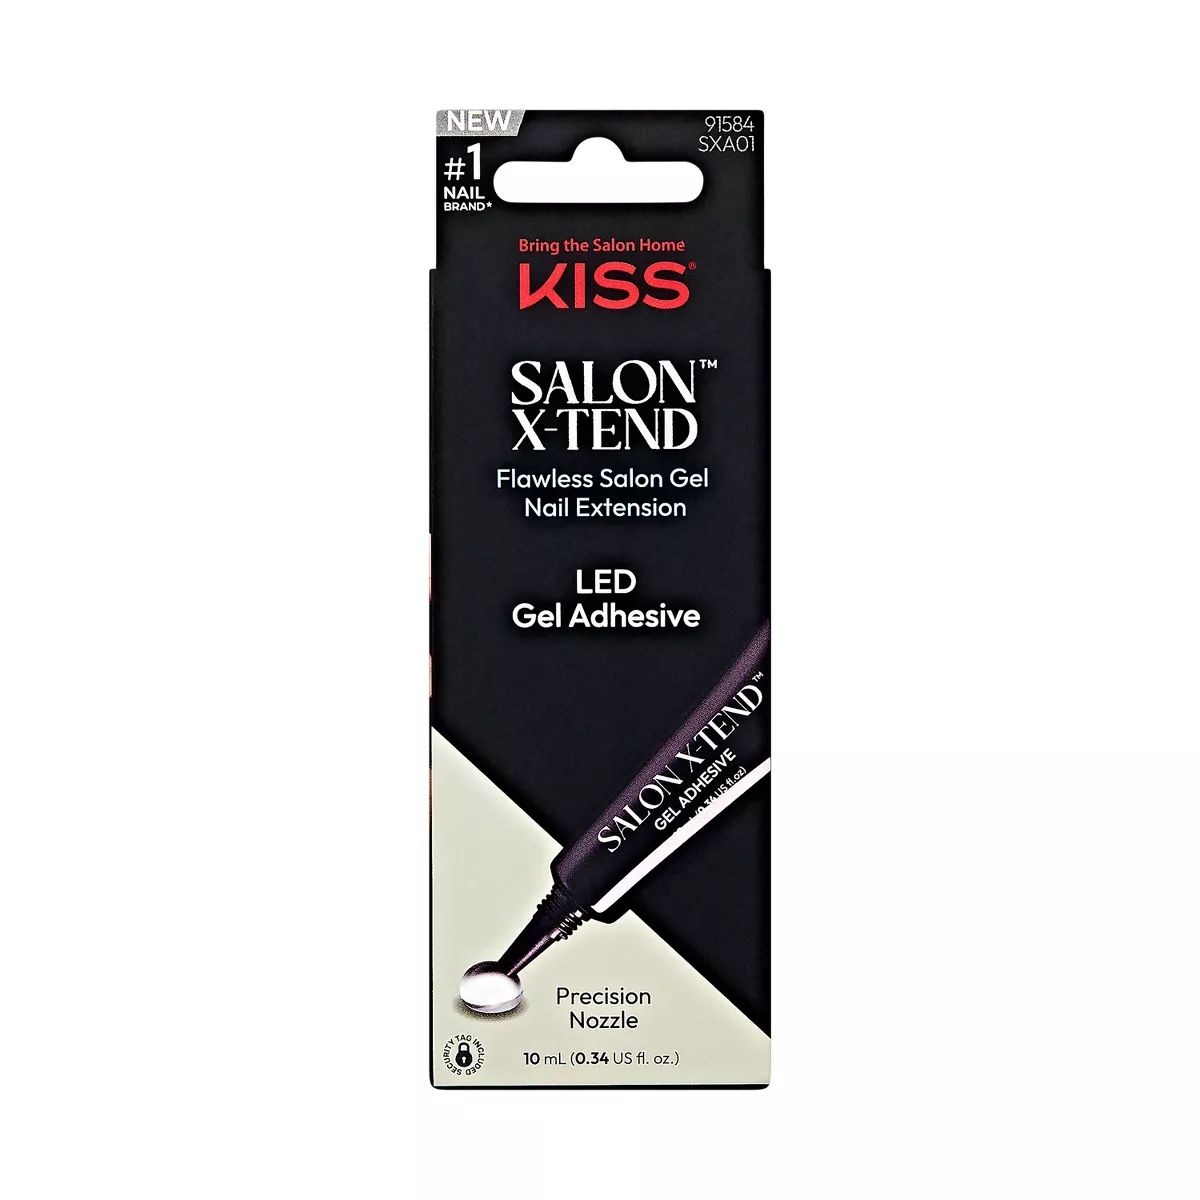 KISS Products Salon X-tend LED Soft Gel Adhesive Fake Nails - 0.34 fl oz | Target